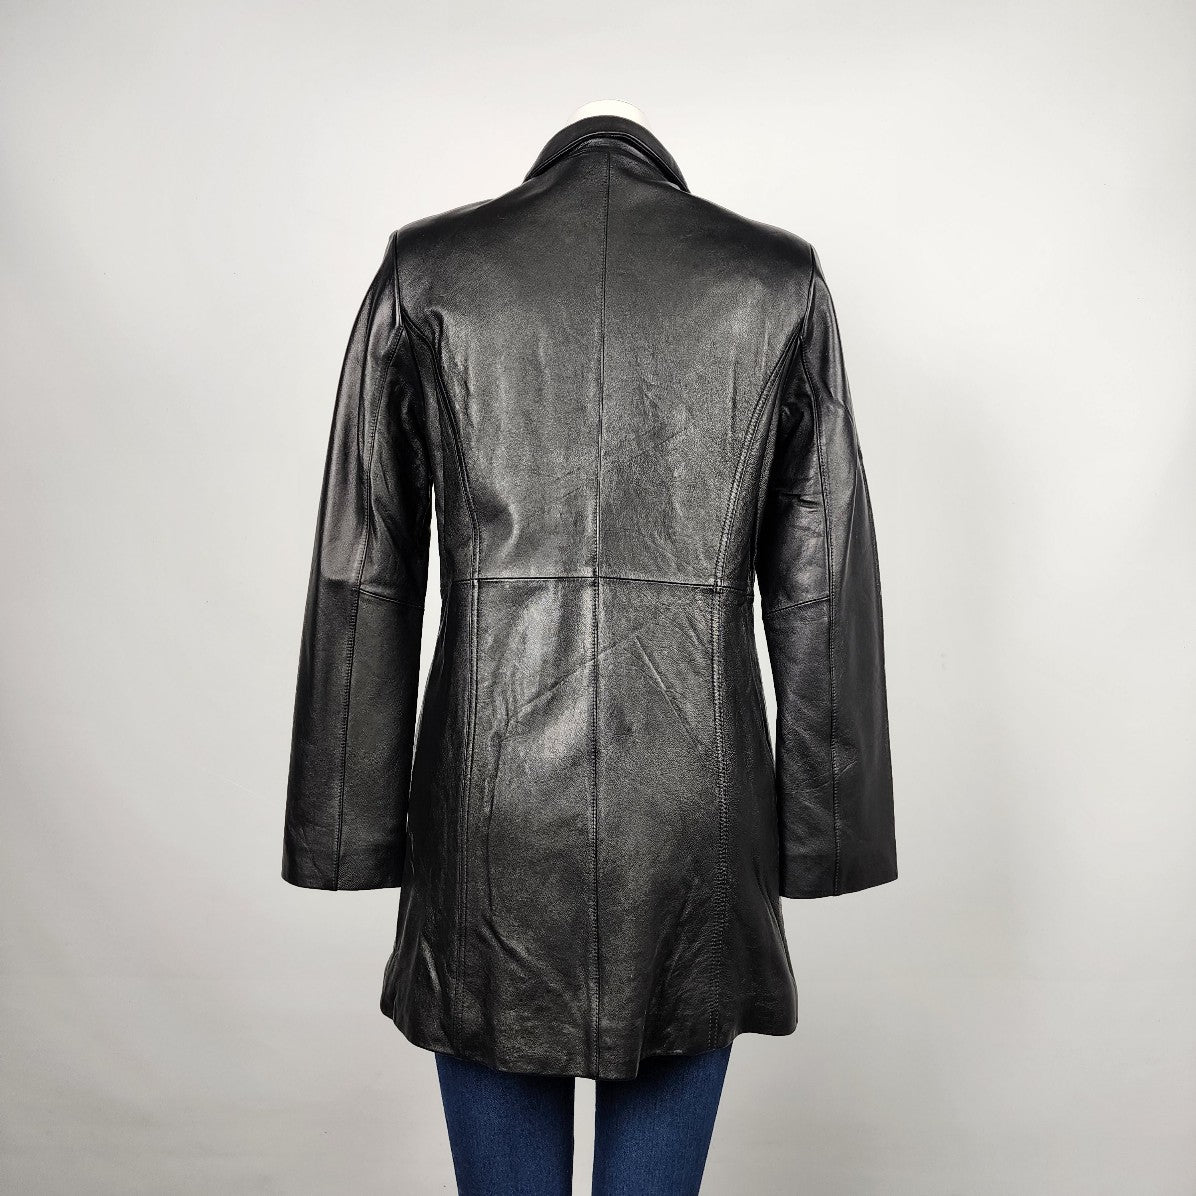 Jaclyn Smith Black Leather Zip Up Jacket Size S